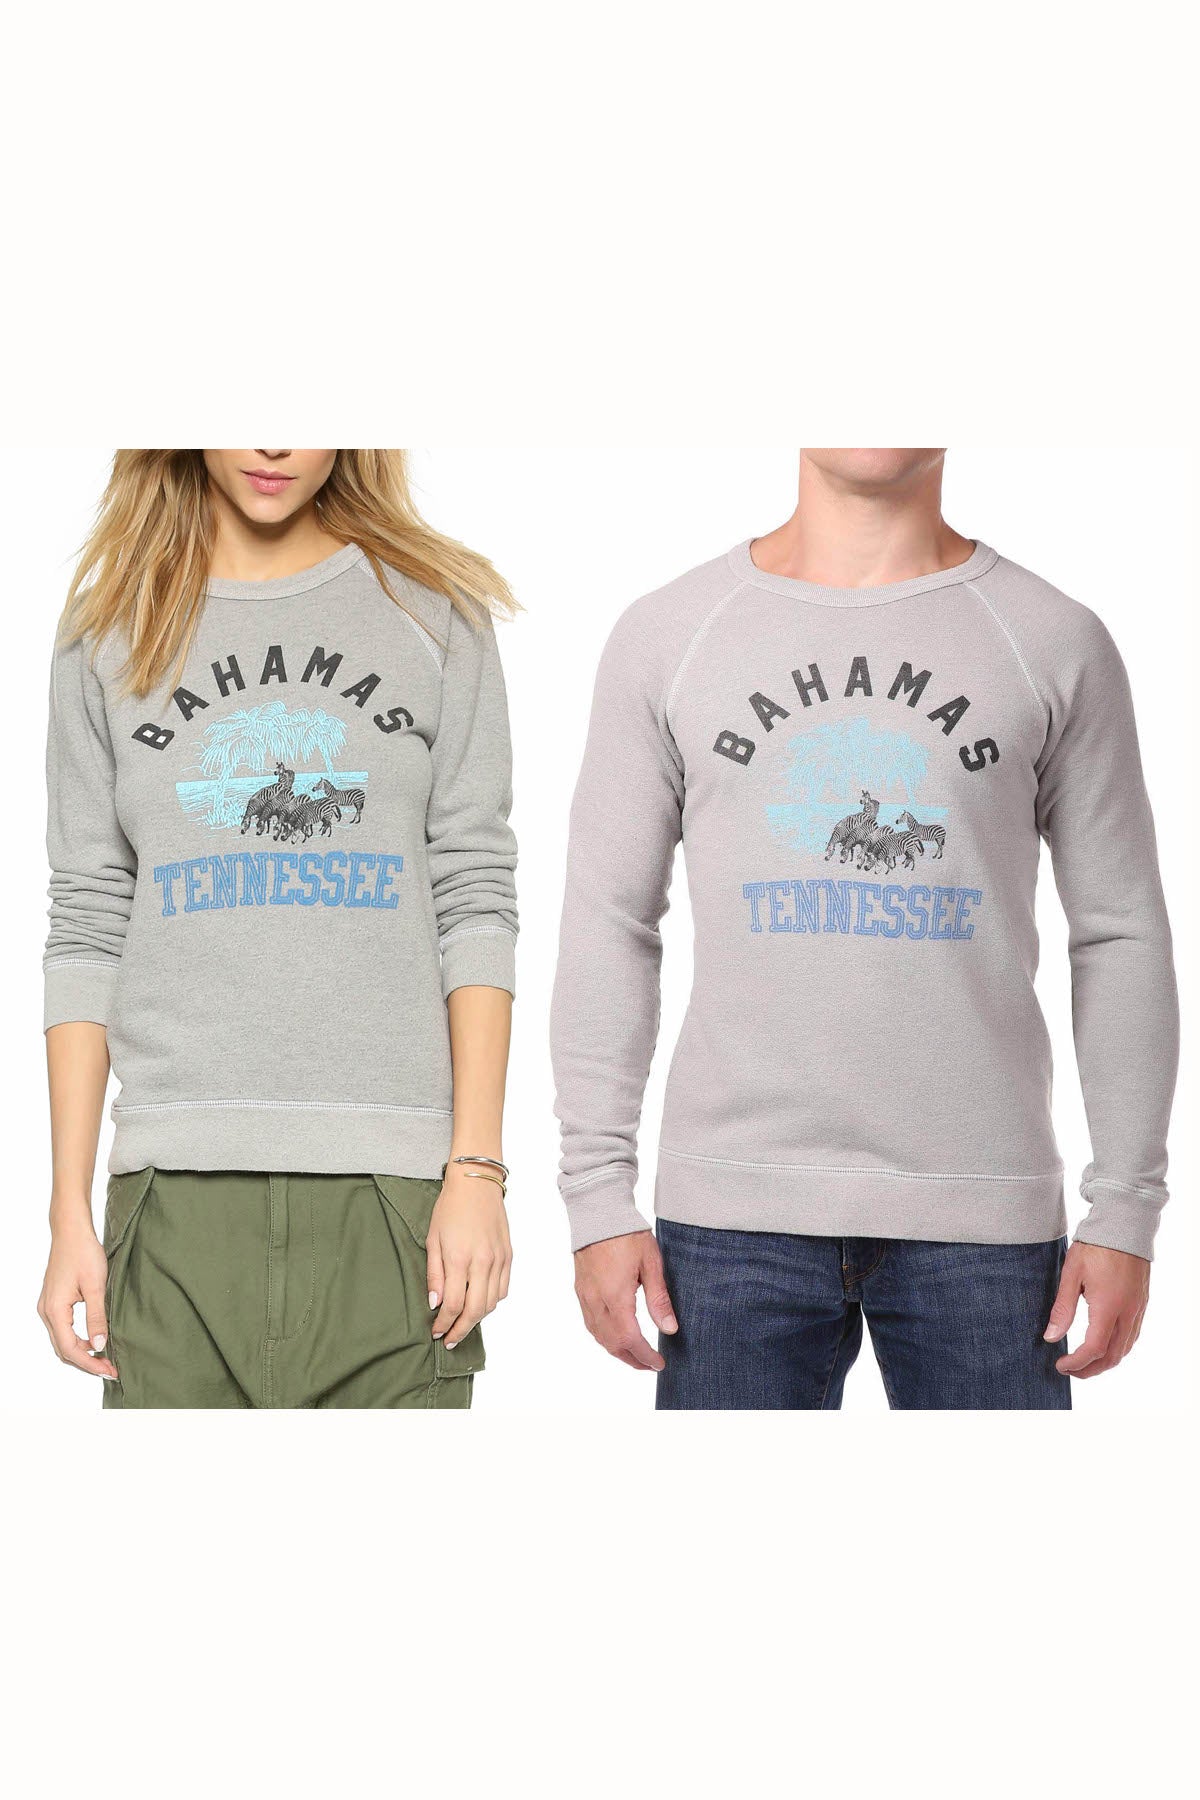 Rxmance Unisex Black Bahamas Tennessee Sweatshirt